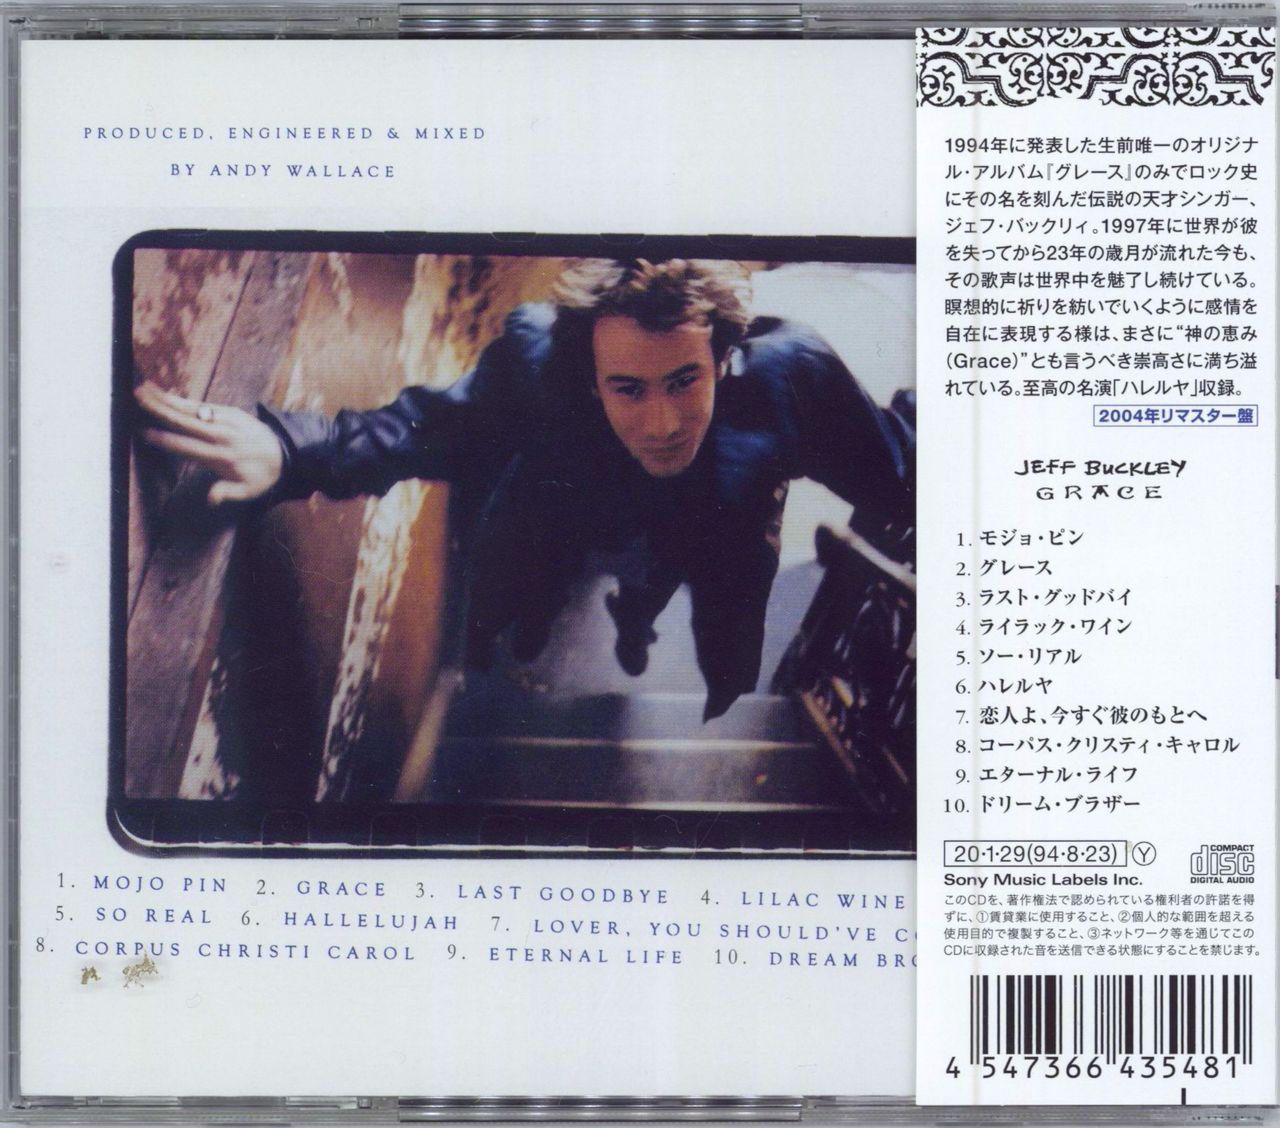 Jeff Buckley Grace Japanese CD album — RareVinyl.com